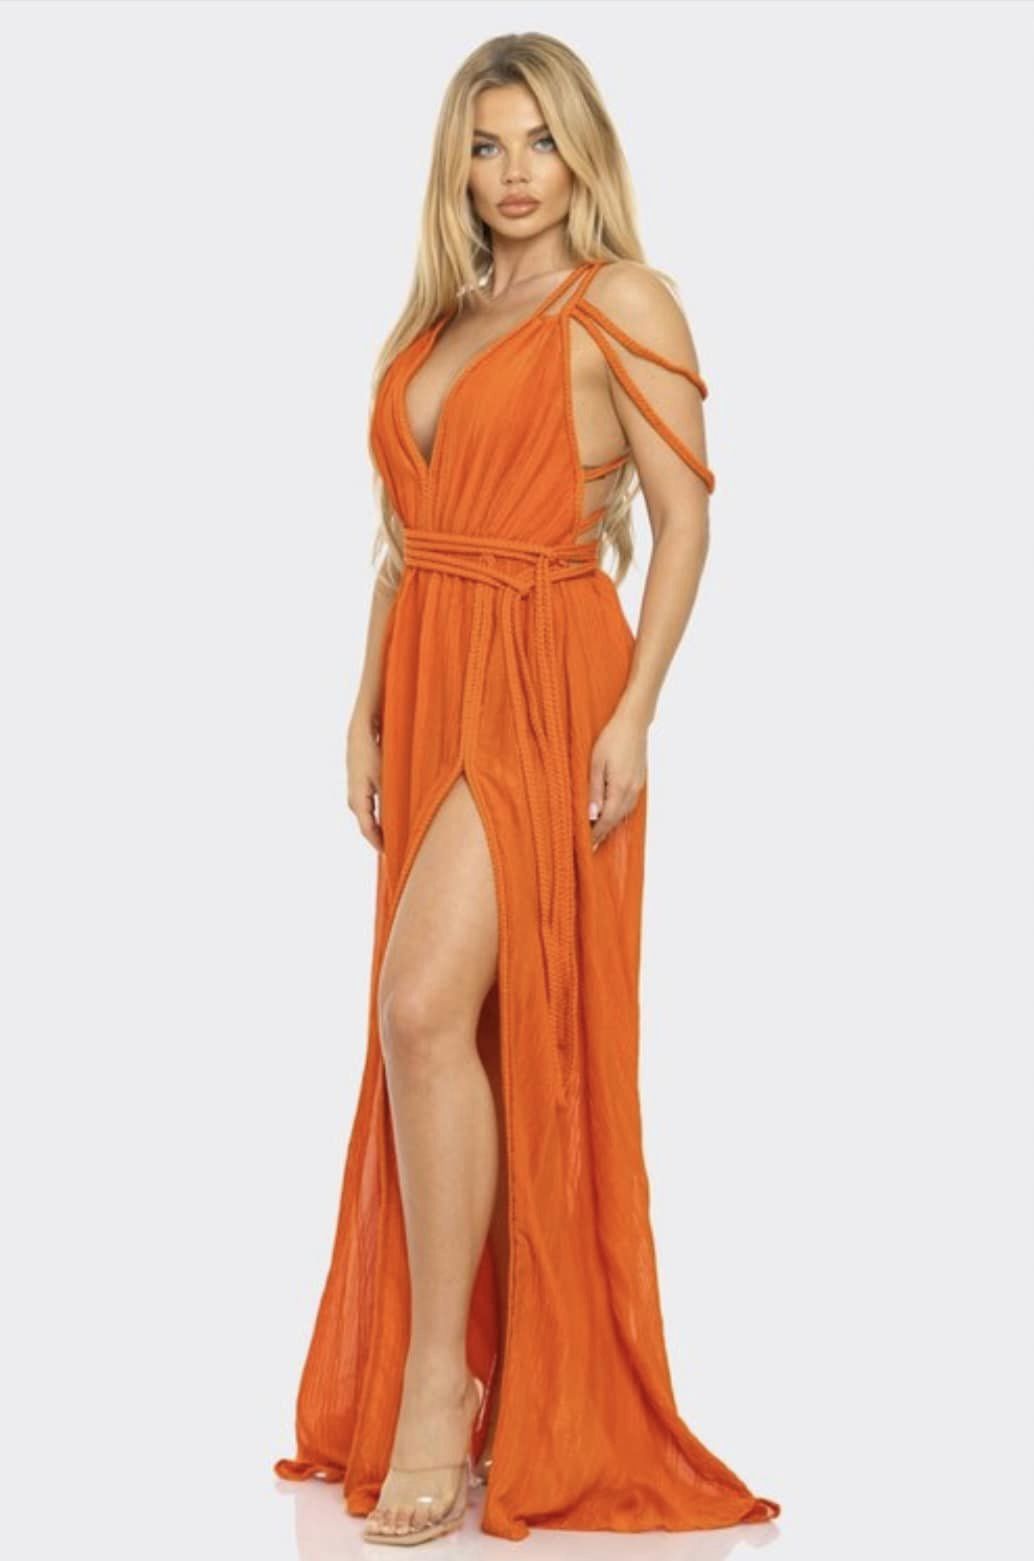 The Orange Godess Dress - On the Runway Fashion